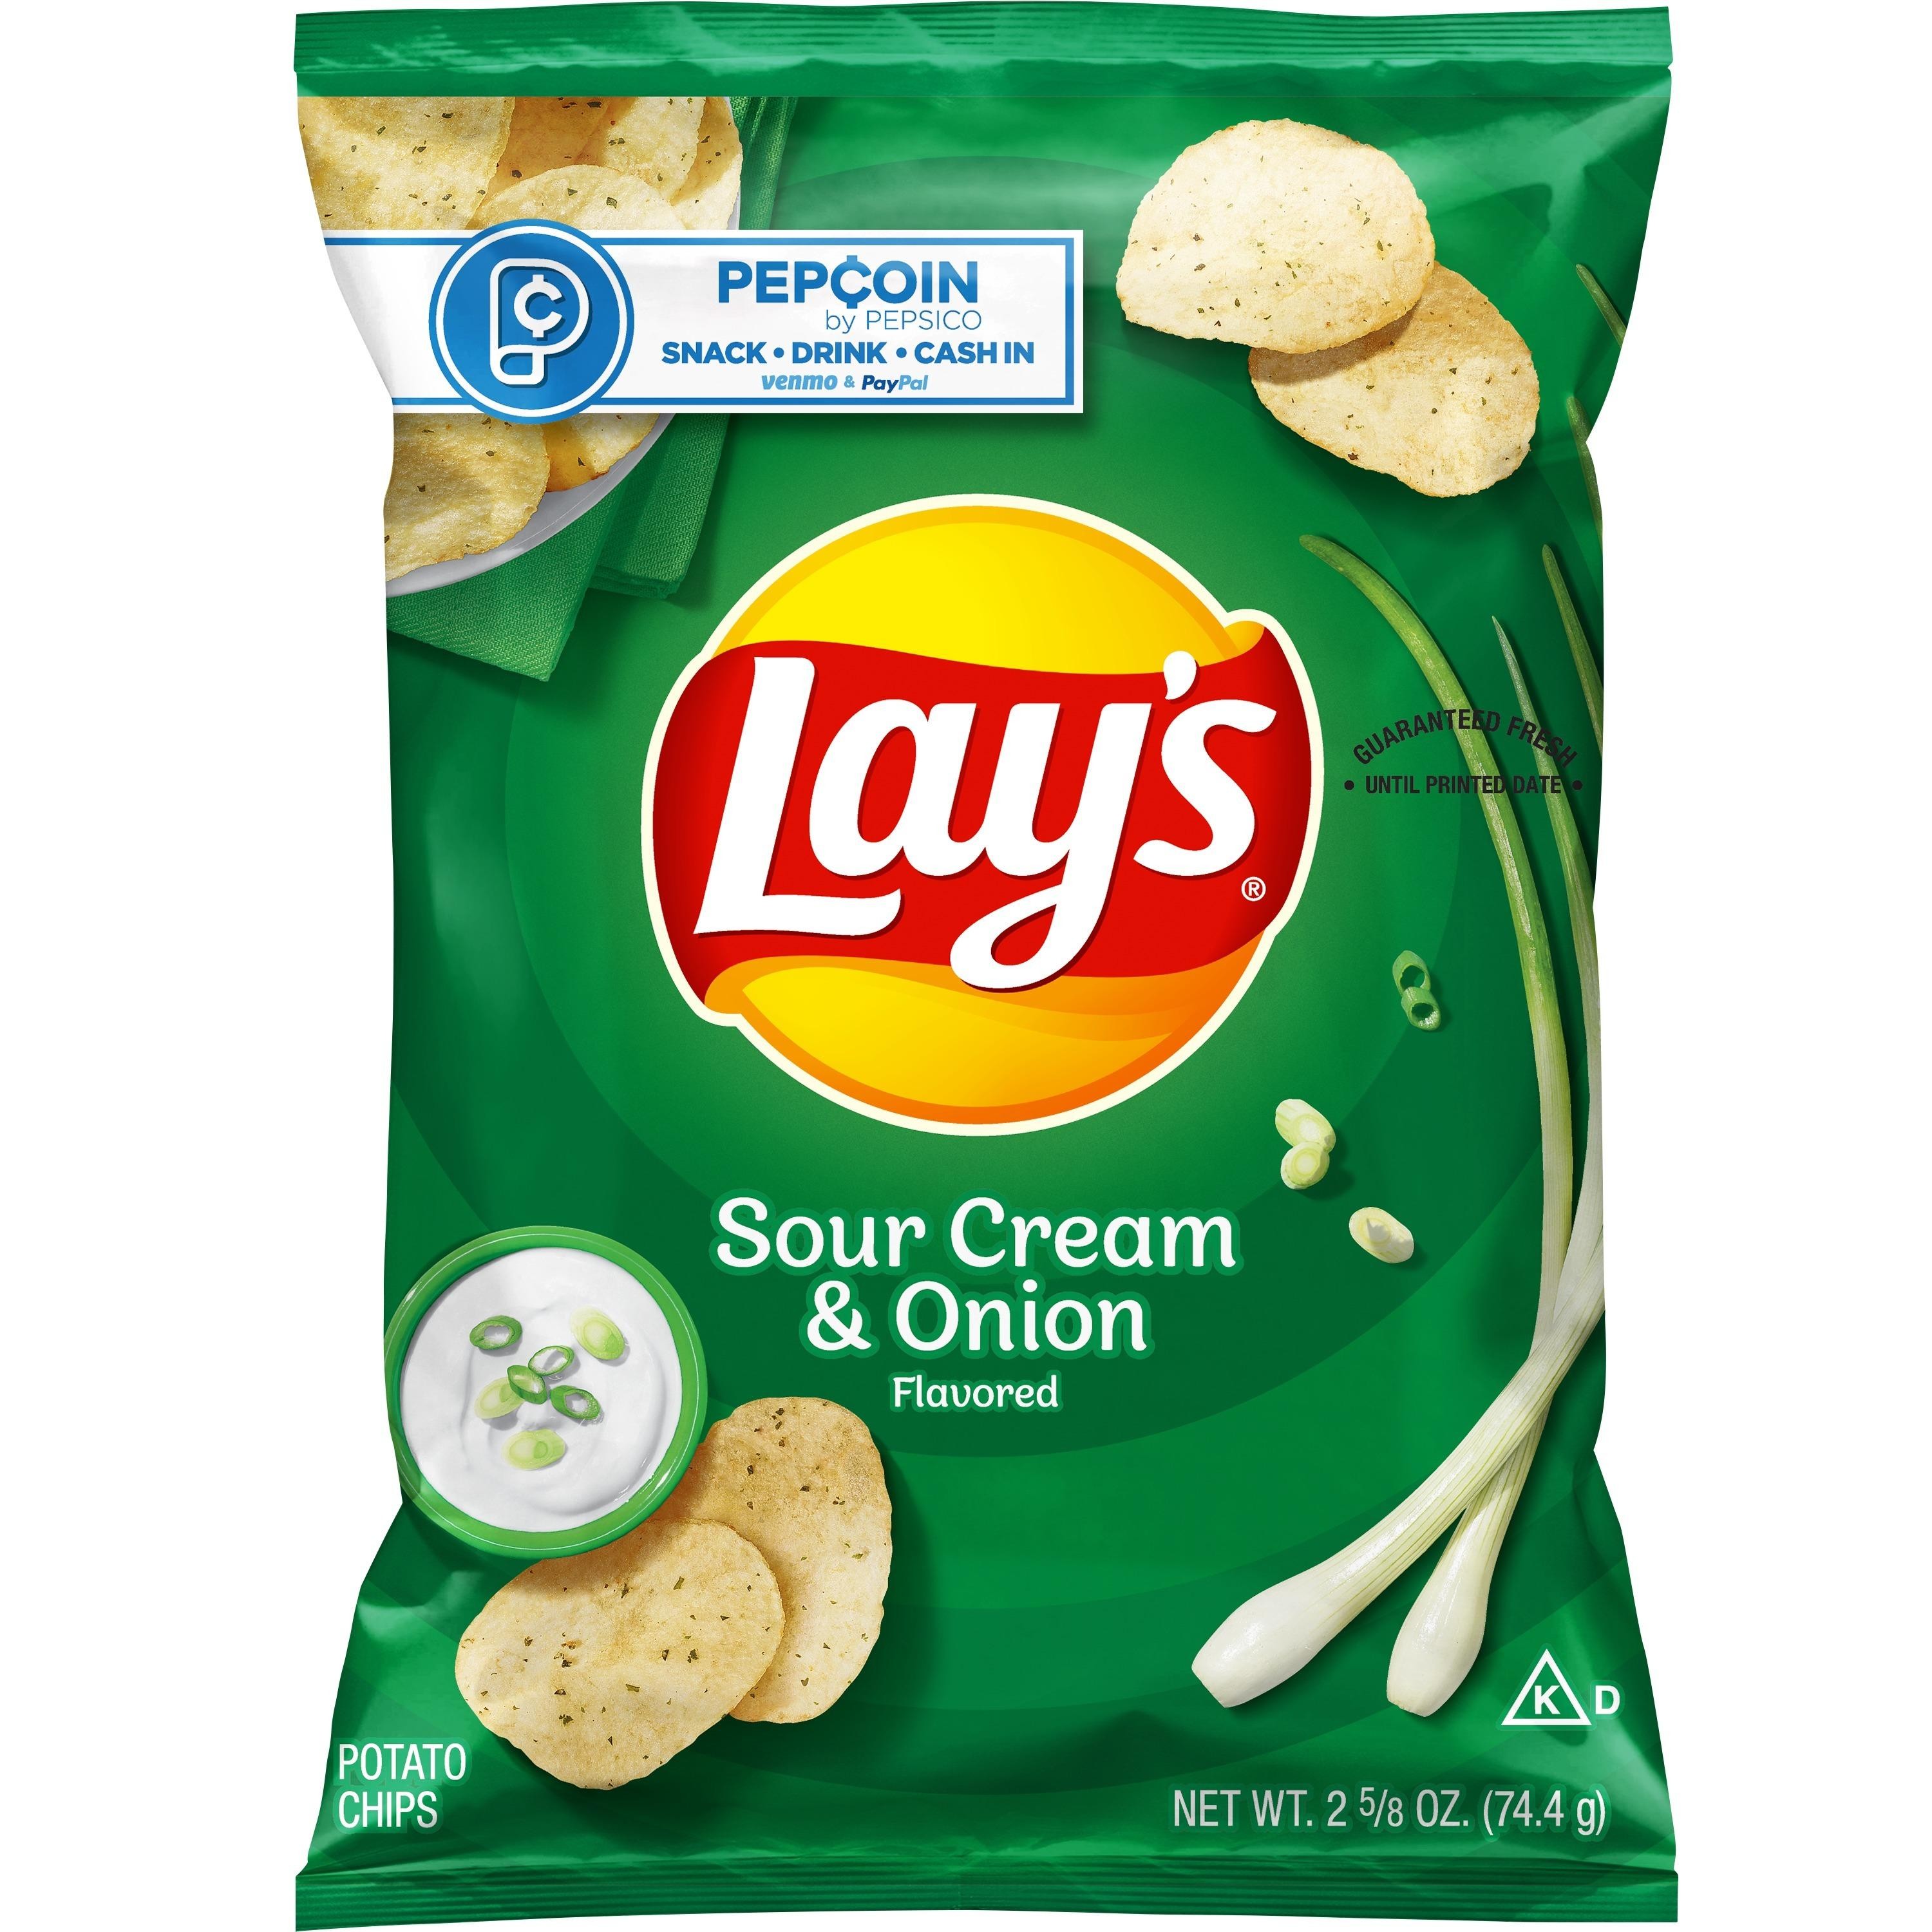 Lay's Sour Cream & Onion SM